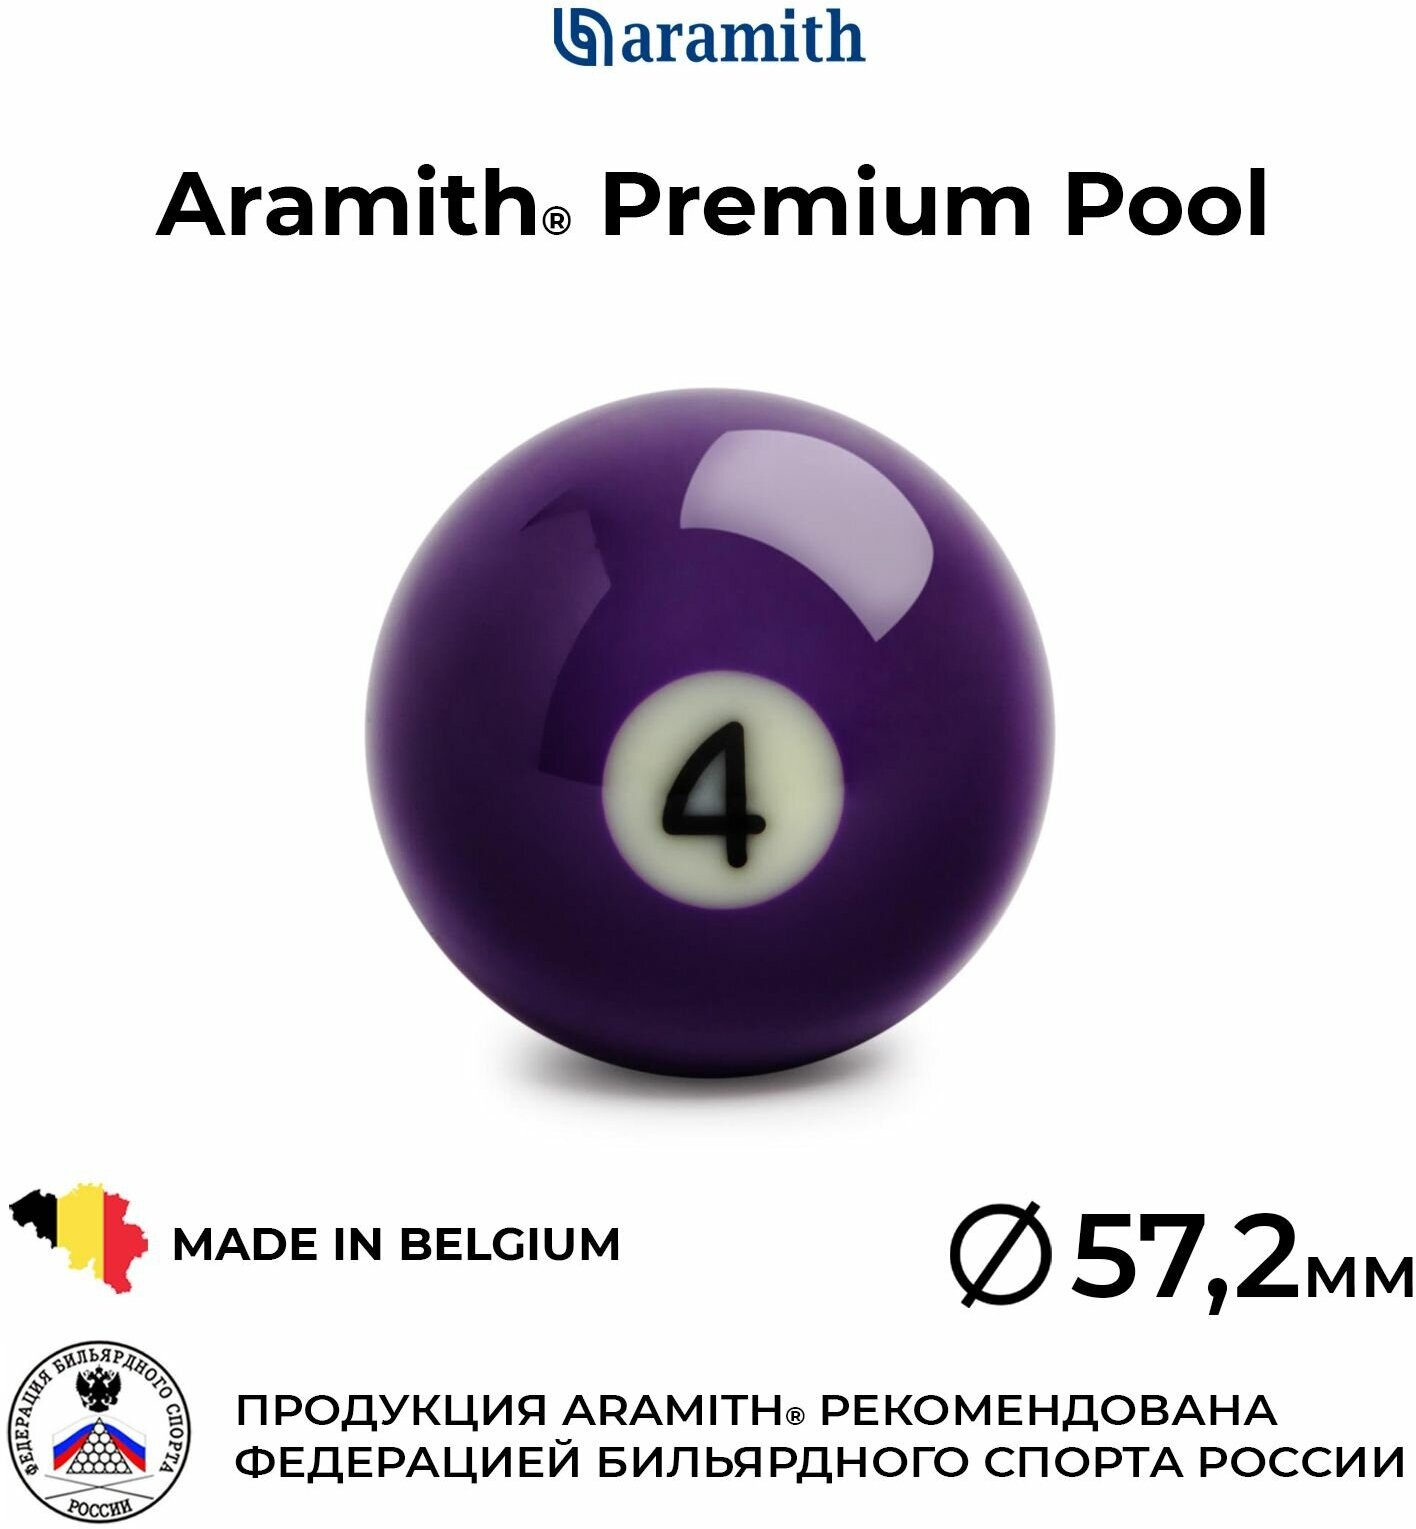 Бильярдный шар 57,2 мм Арамит Премиум Пул №4 / Aramith Premium Pool №4 57,2 мм фиолетовый 1 шт.